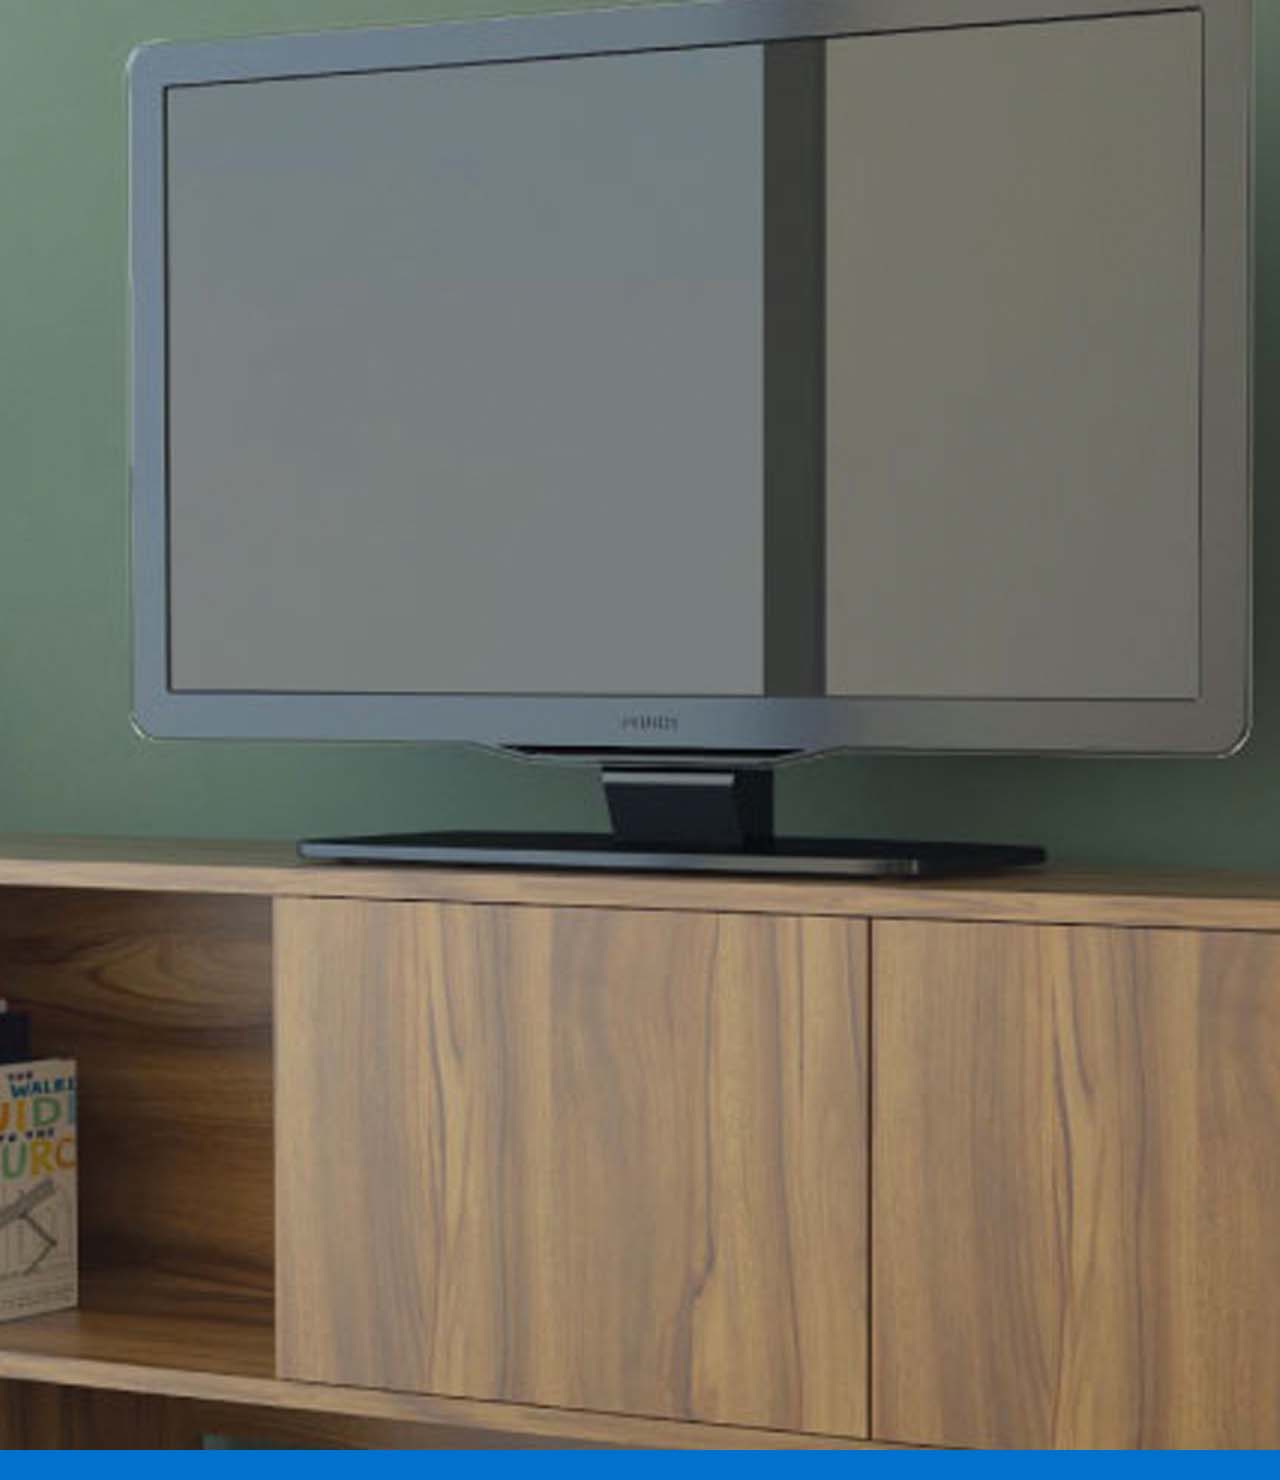 Guante limpiador para pantallas de televisión o computa